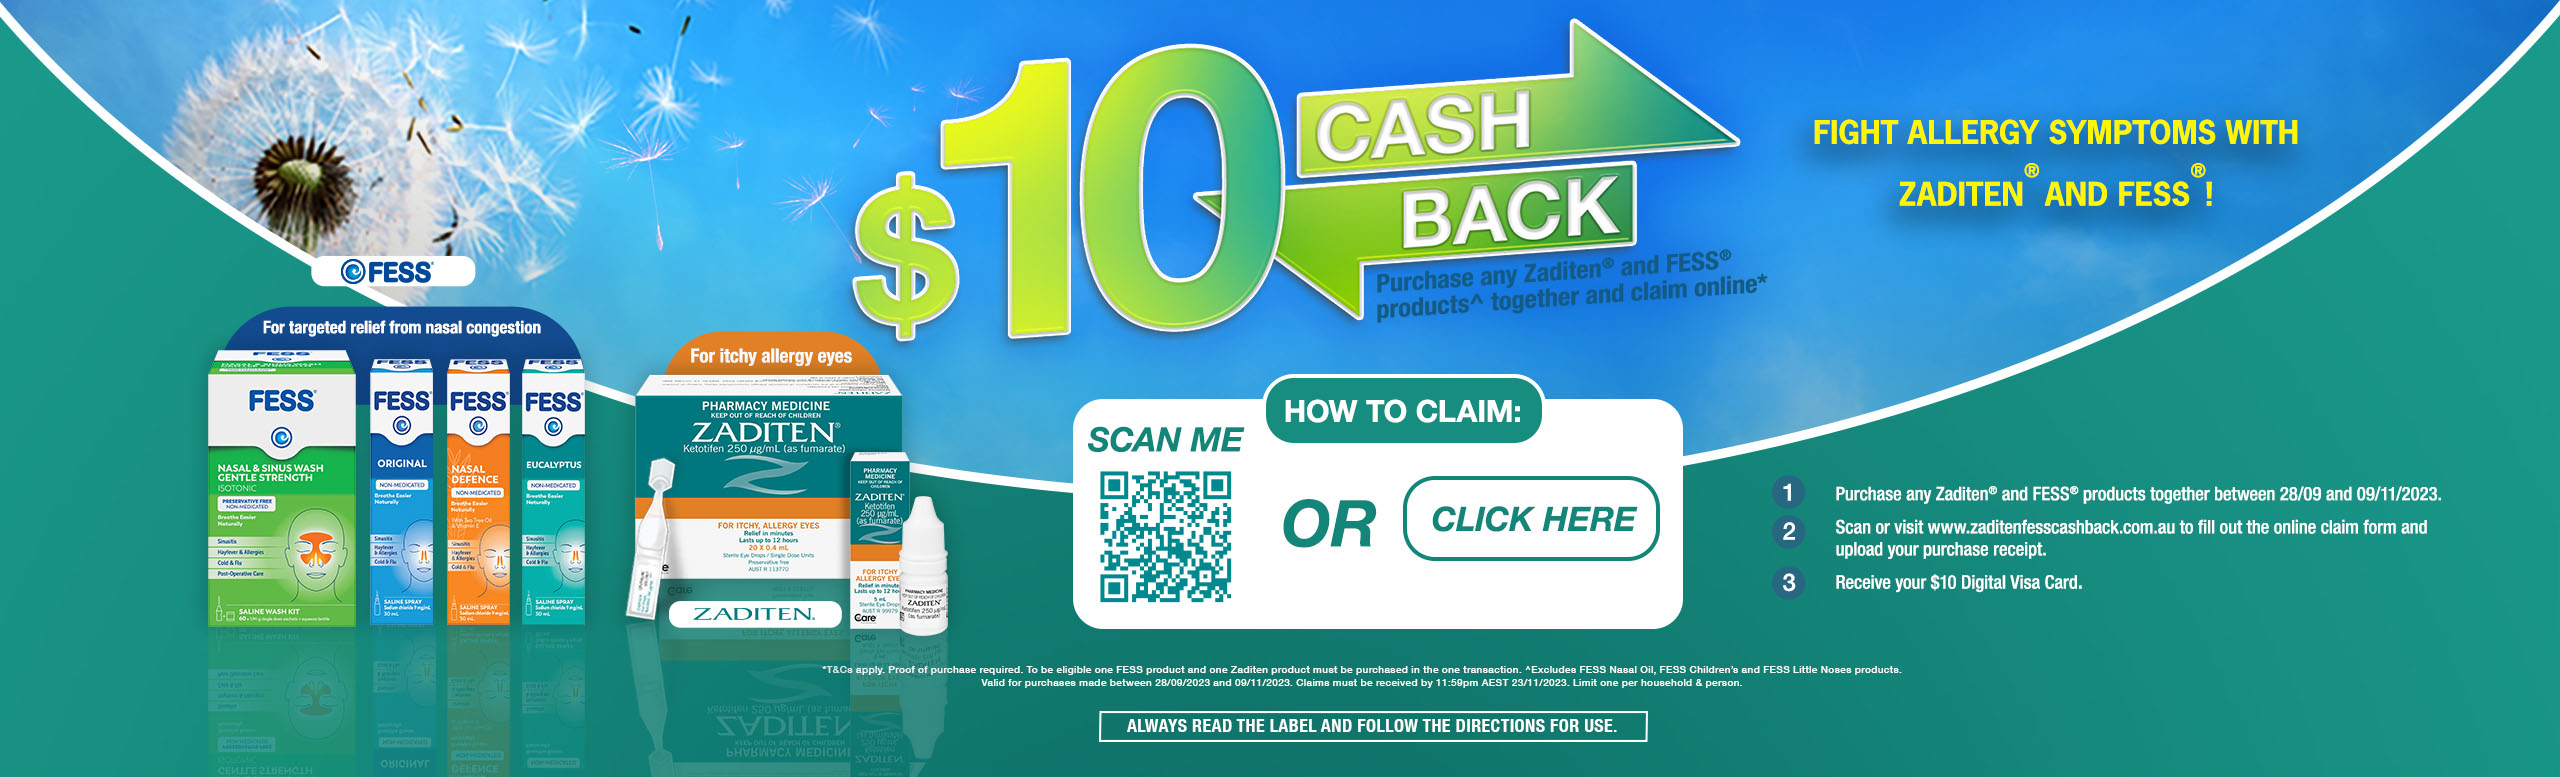 FESS 10-Dollar Cash Back Website Banner Oct 23